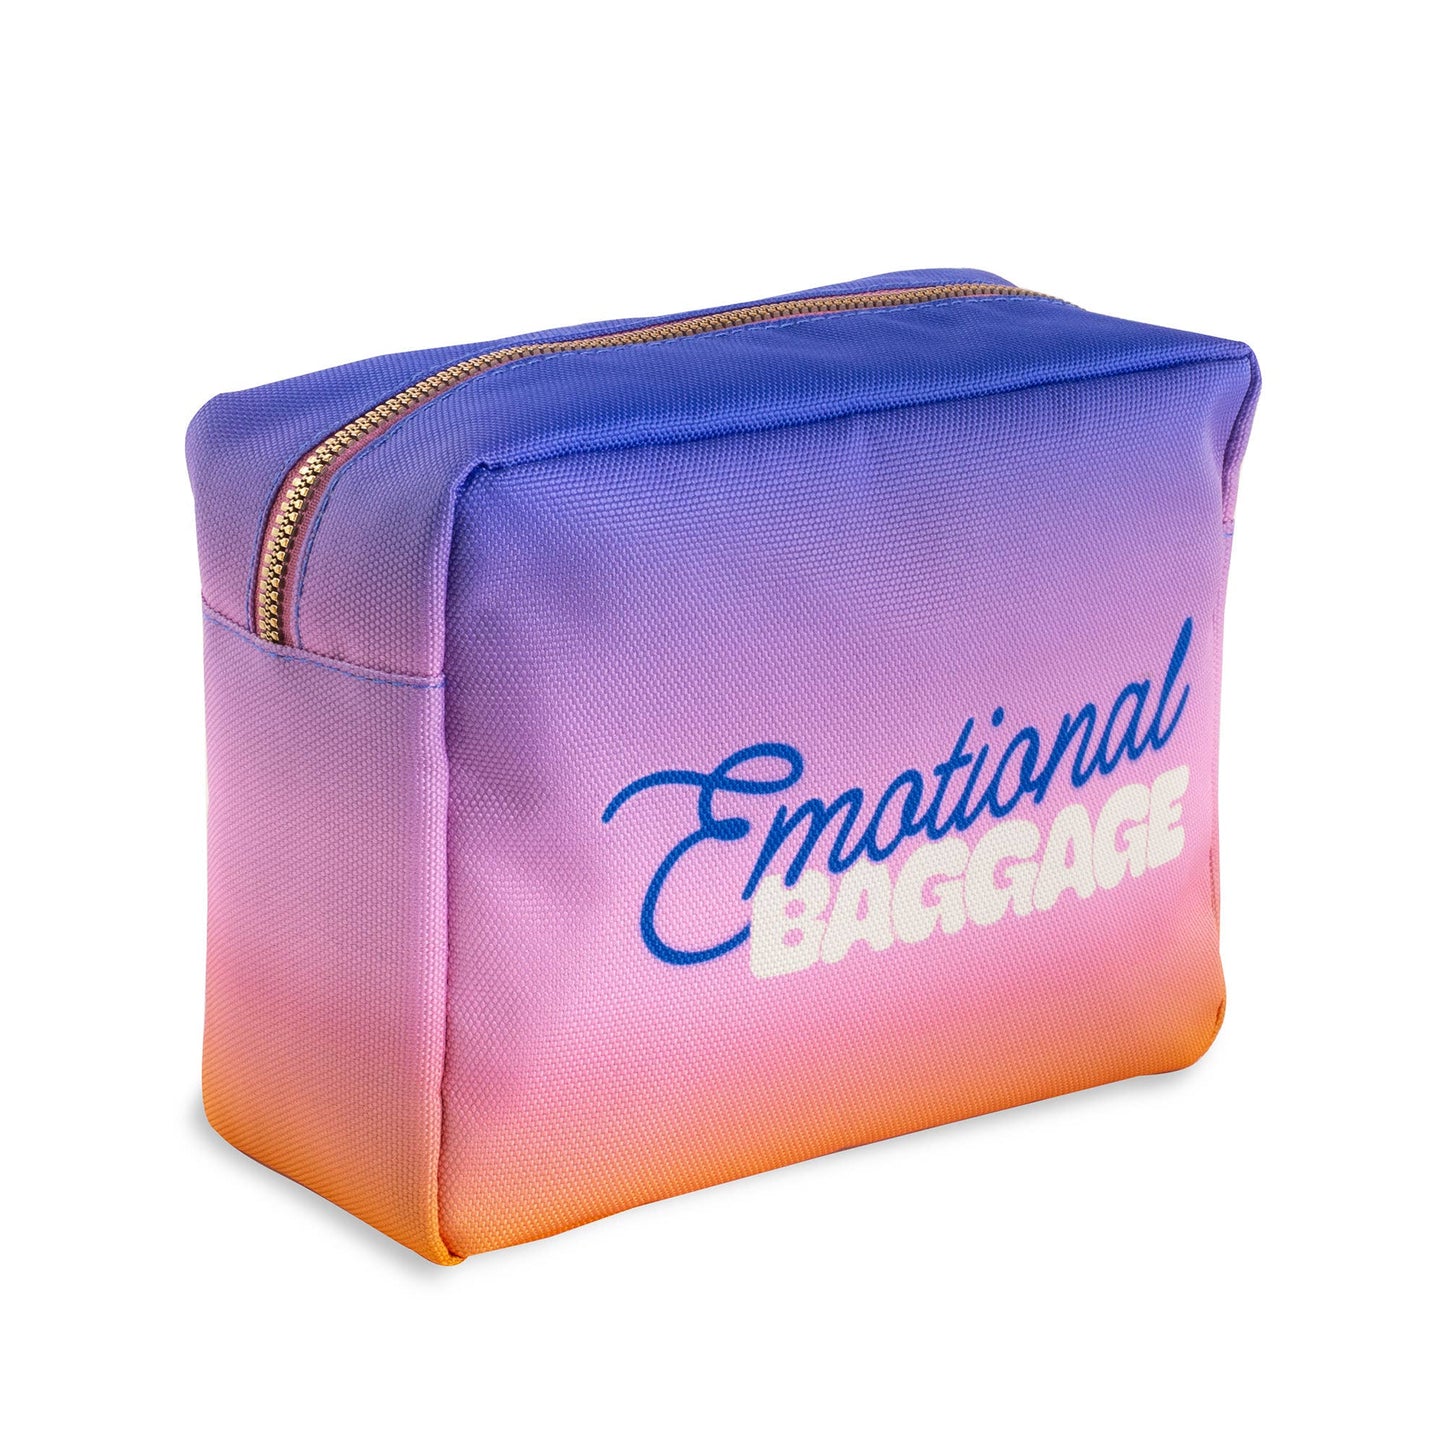 Emotional Baggage Getaway Cosmetic Bag | Makeup Travel Case Organizer Pouch